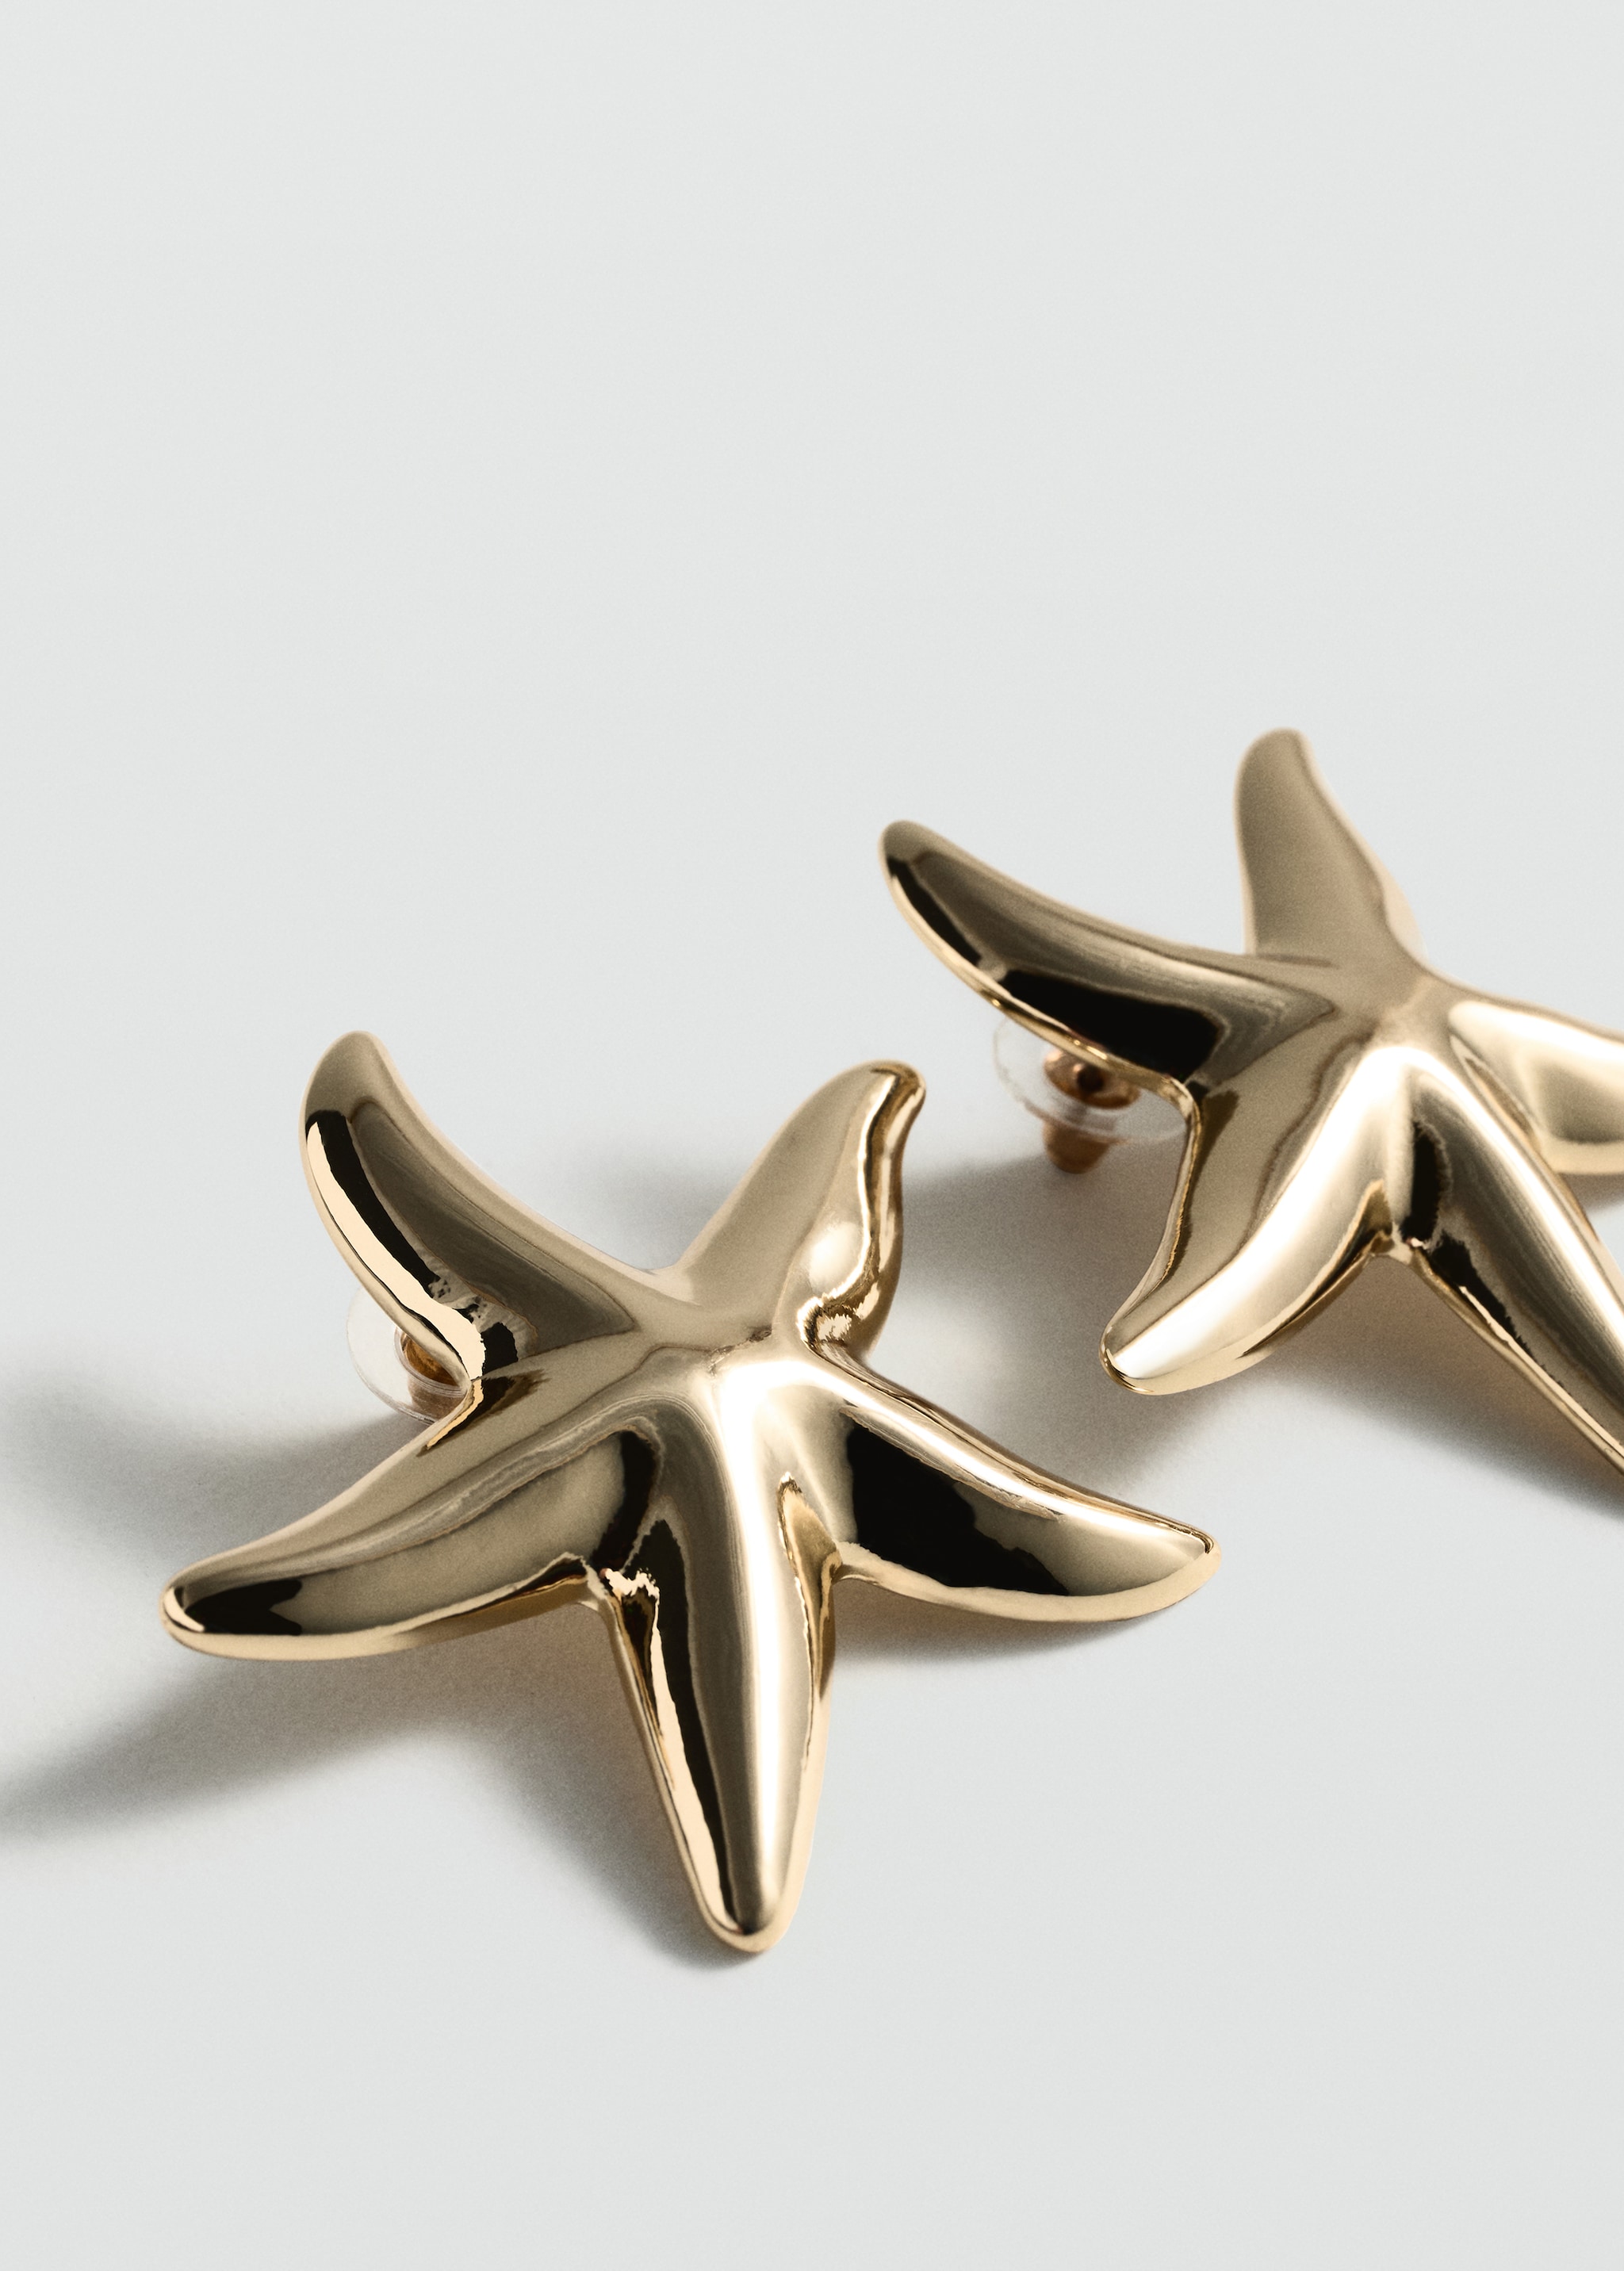 Stars earrings - Medium plane